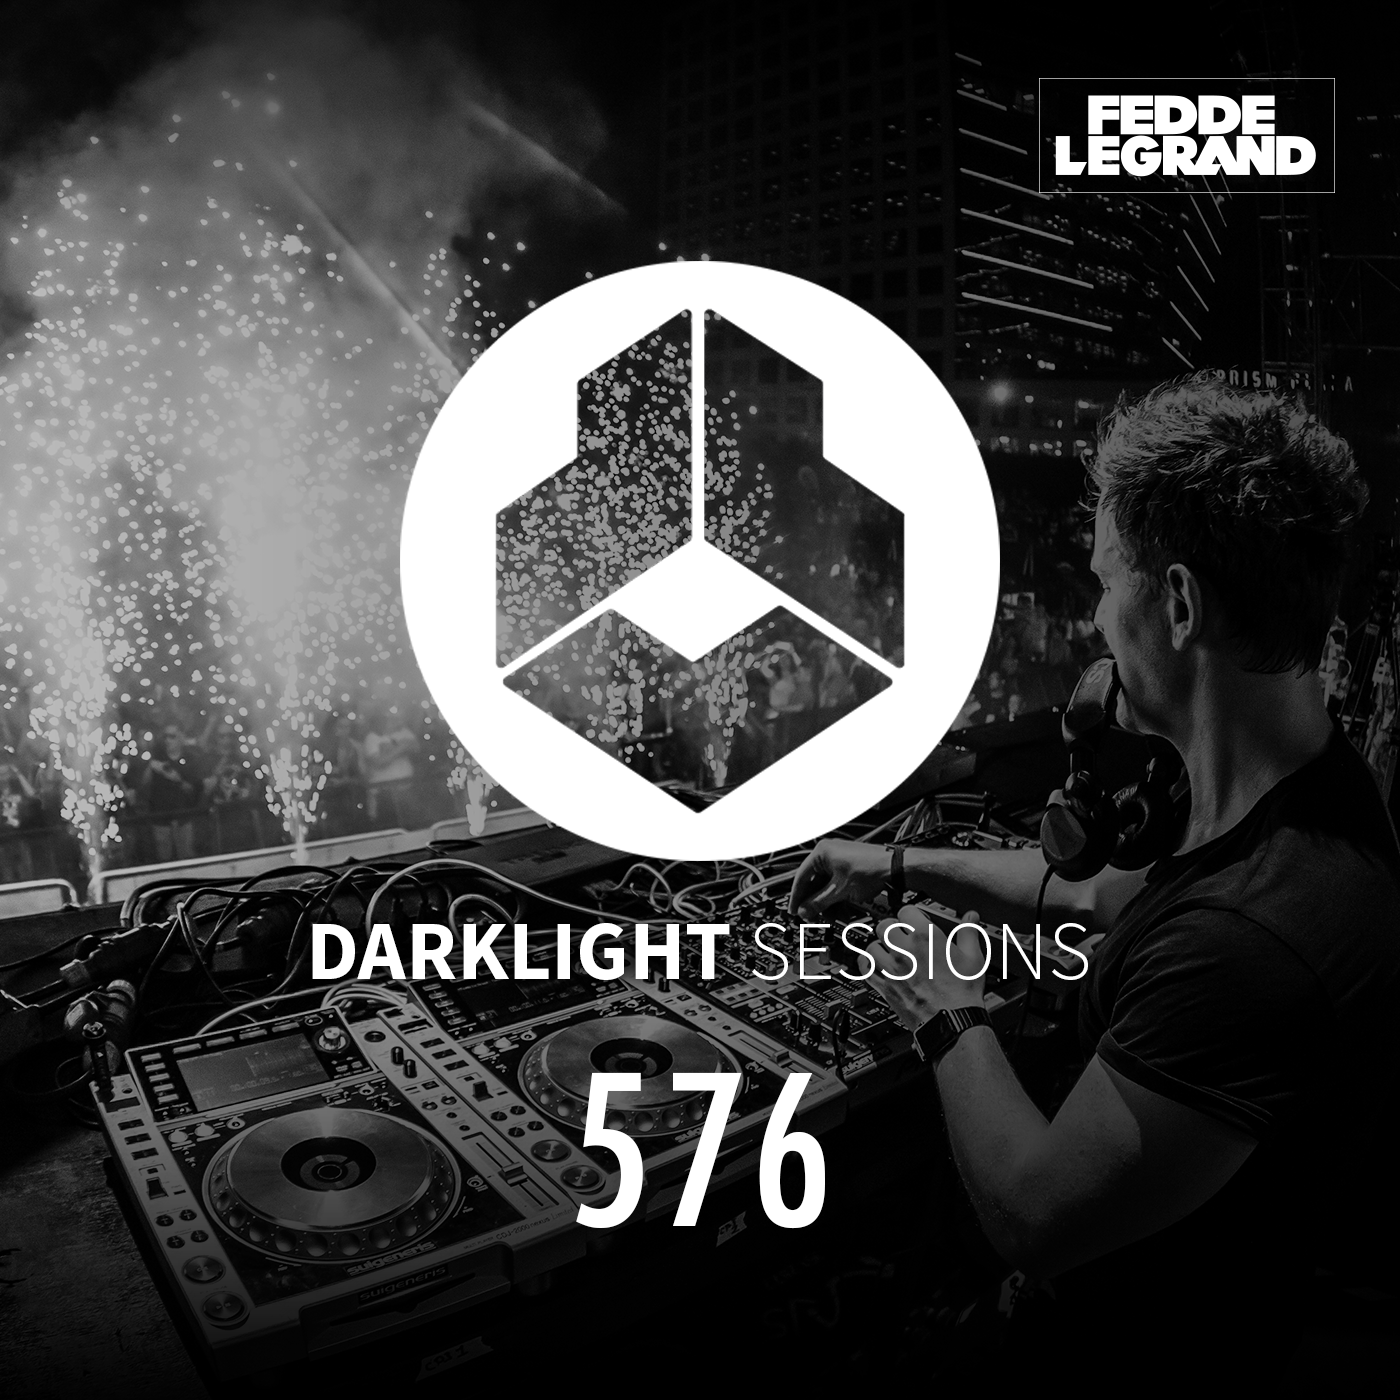 Darklight Sessions 576